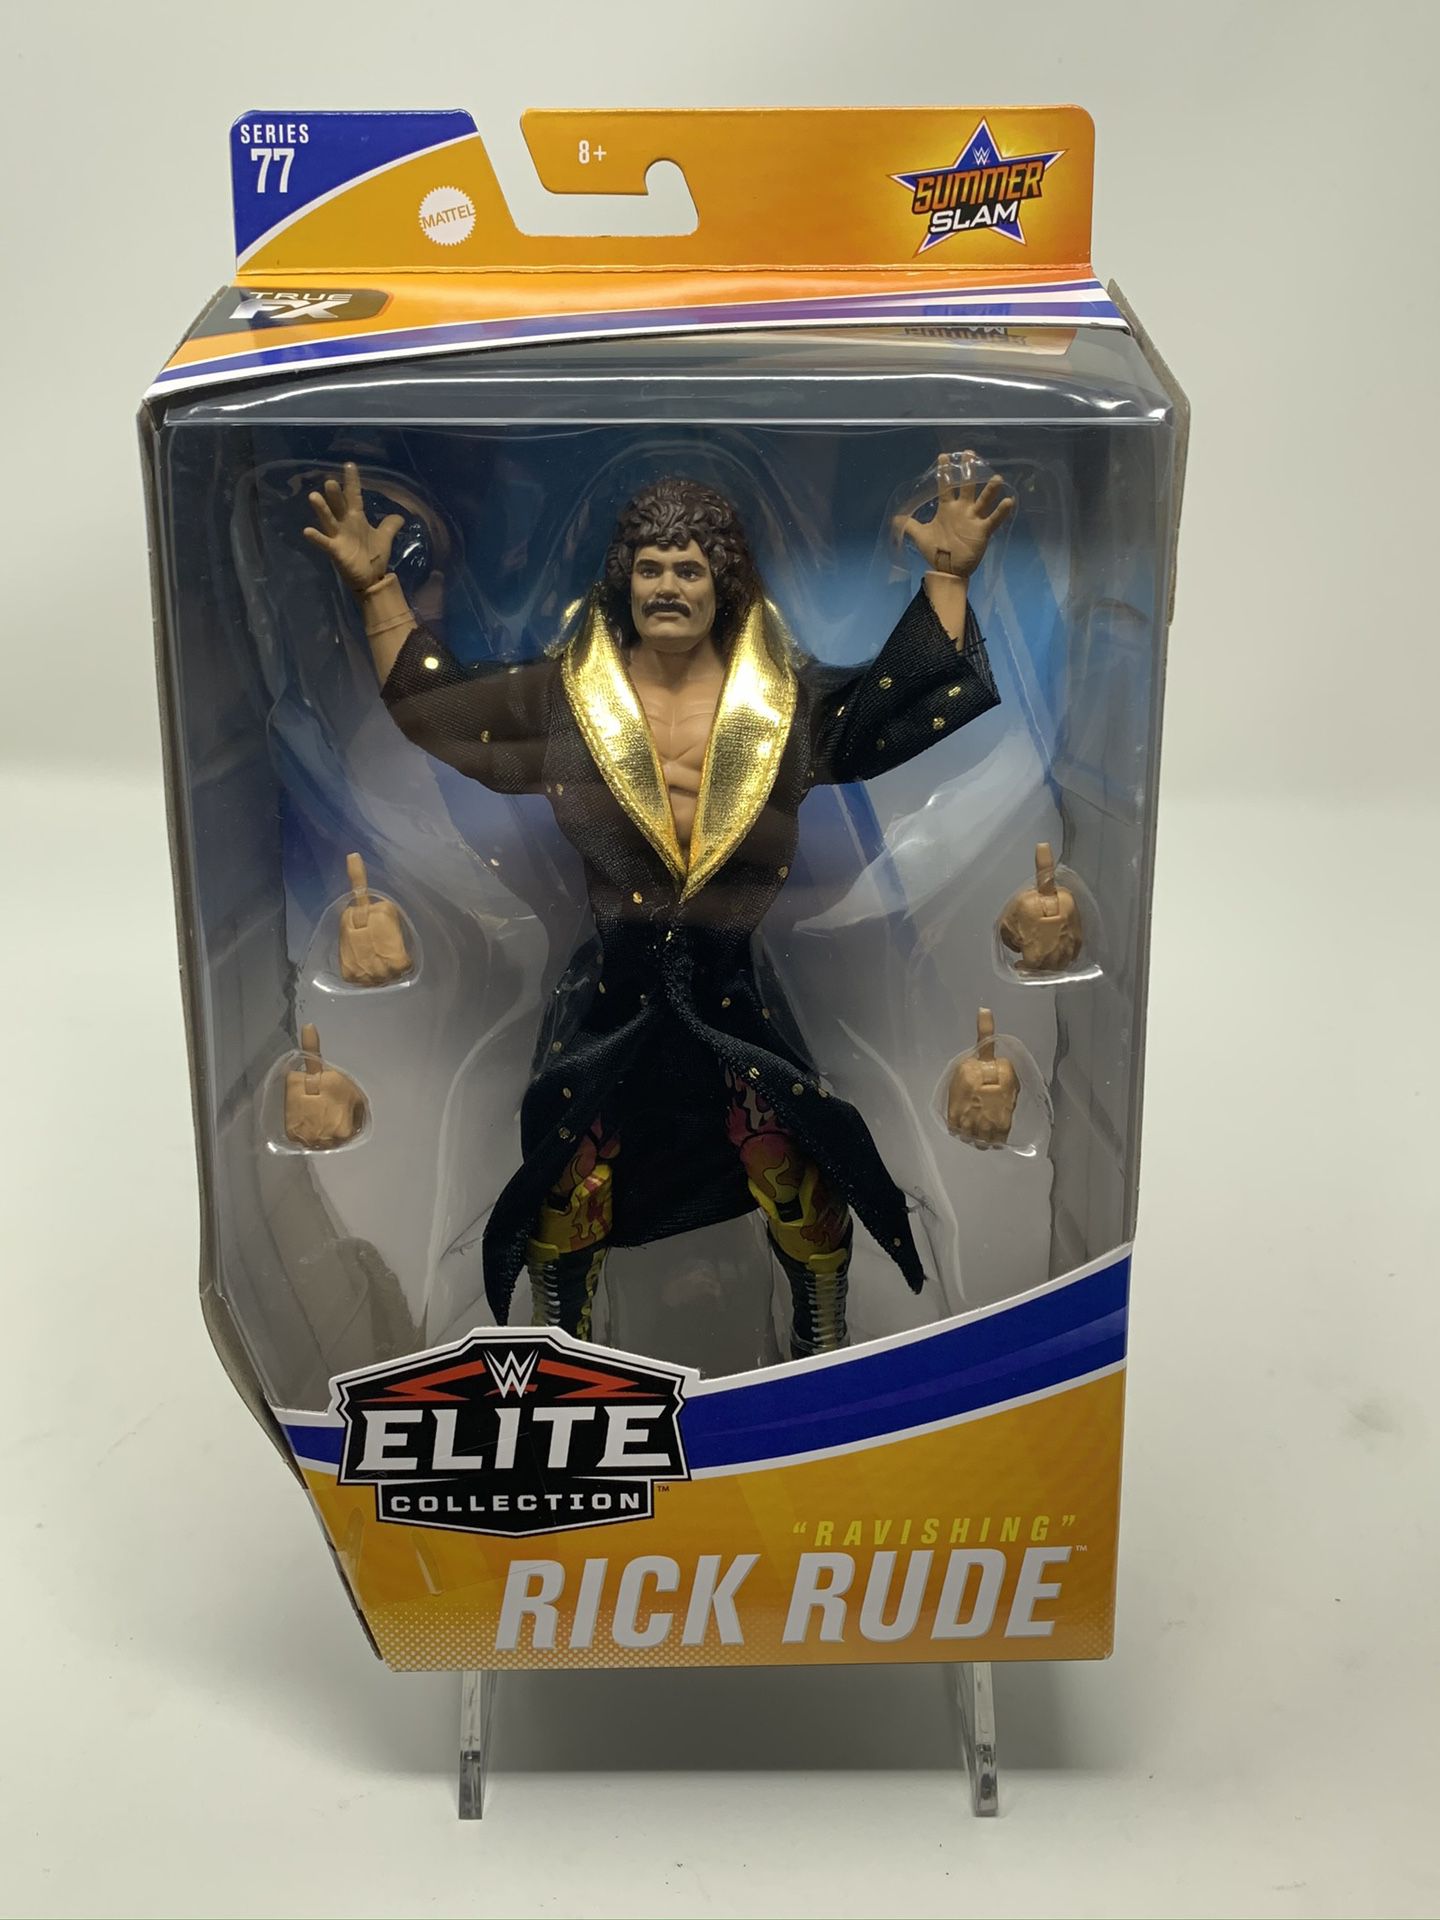 Ravishing Rick Rude WWE Elite Series 77 Action Figure (Brand New)